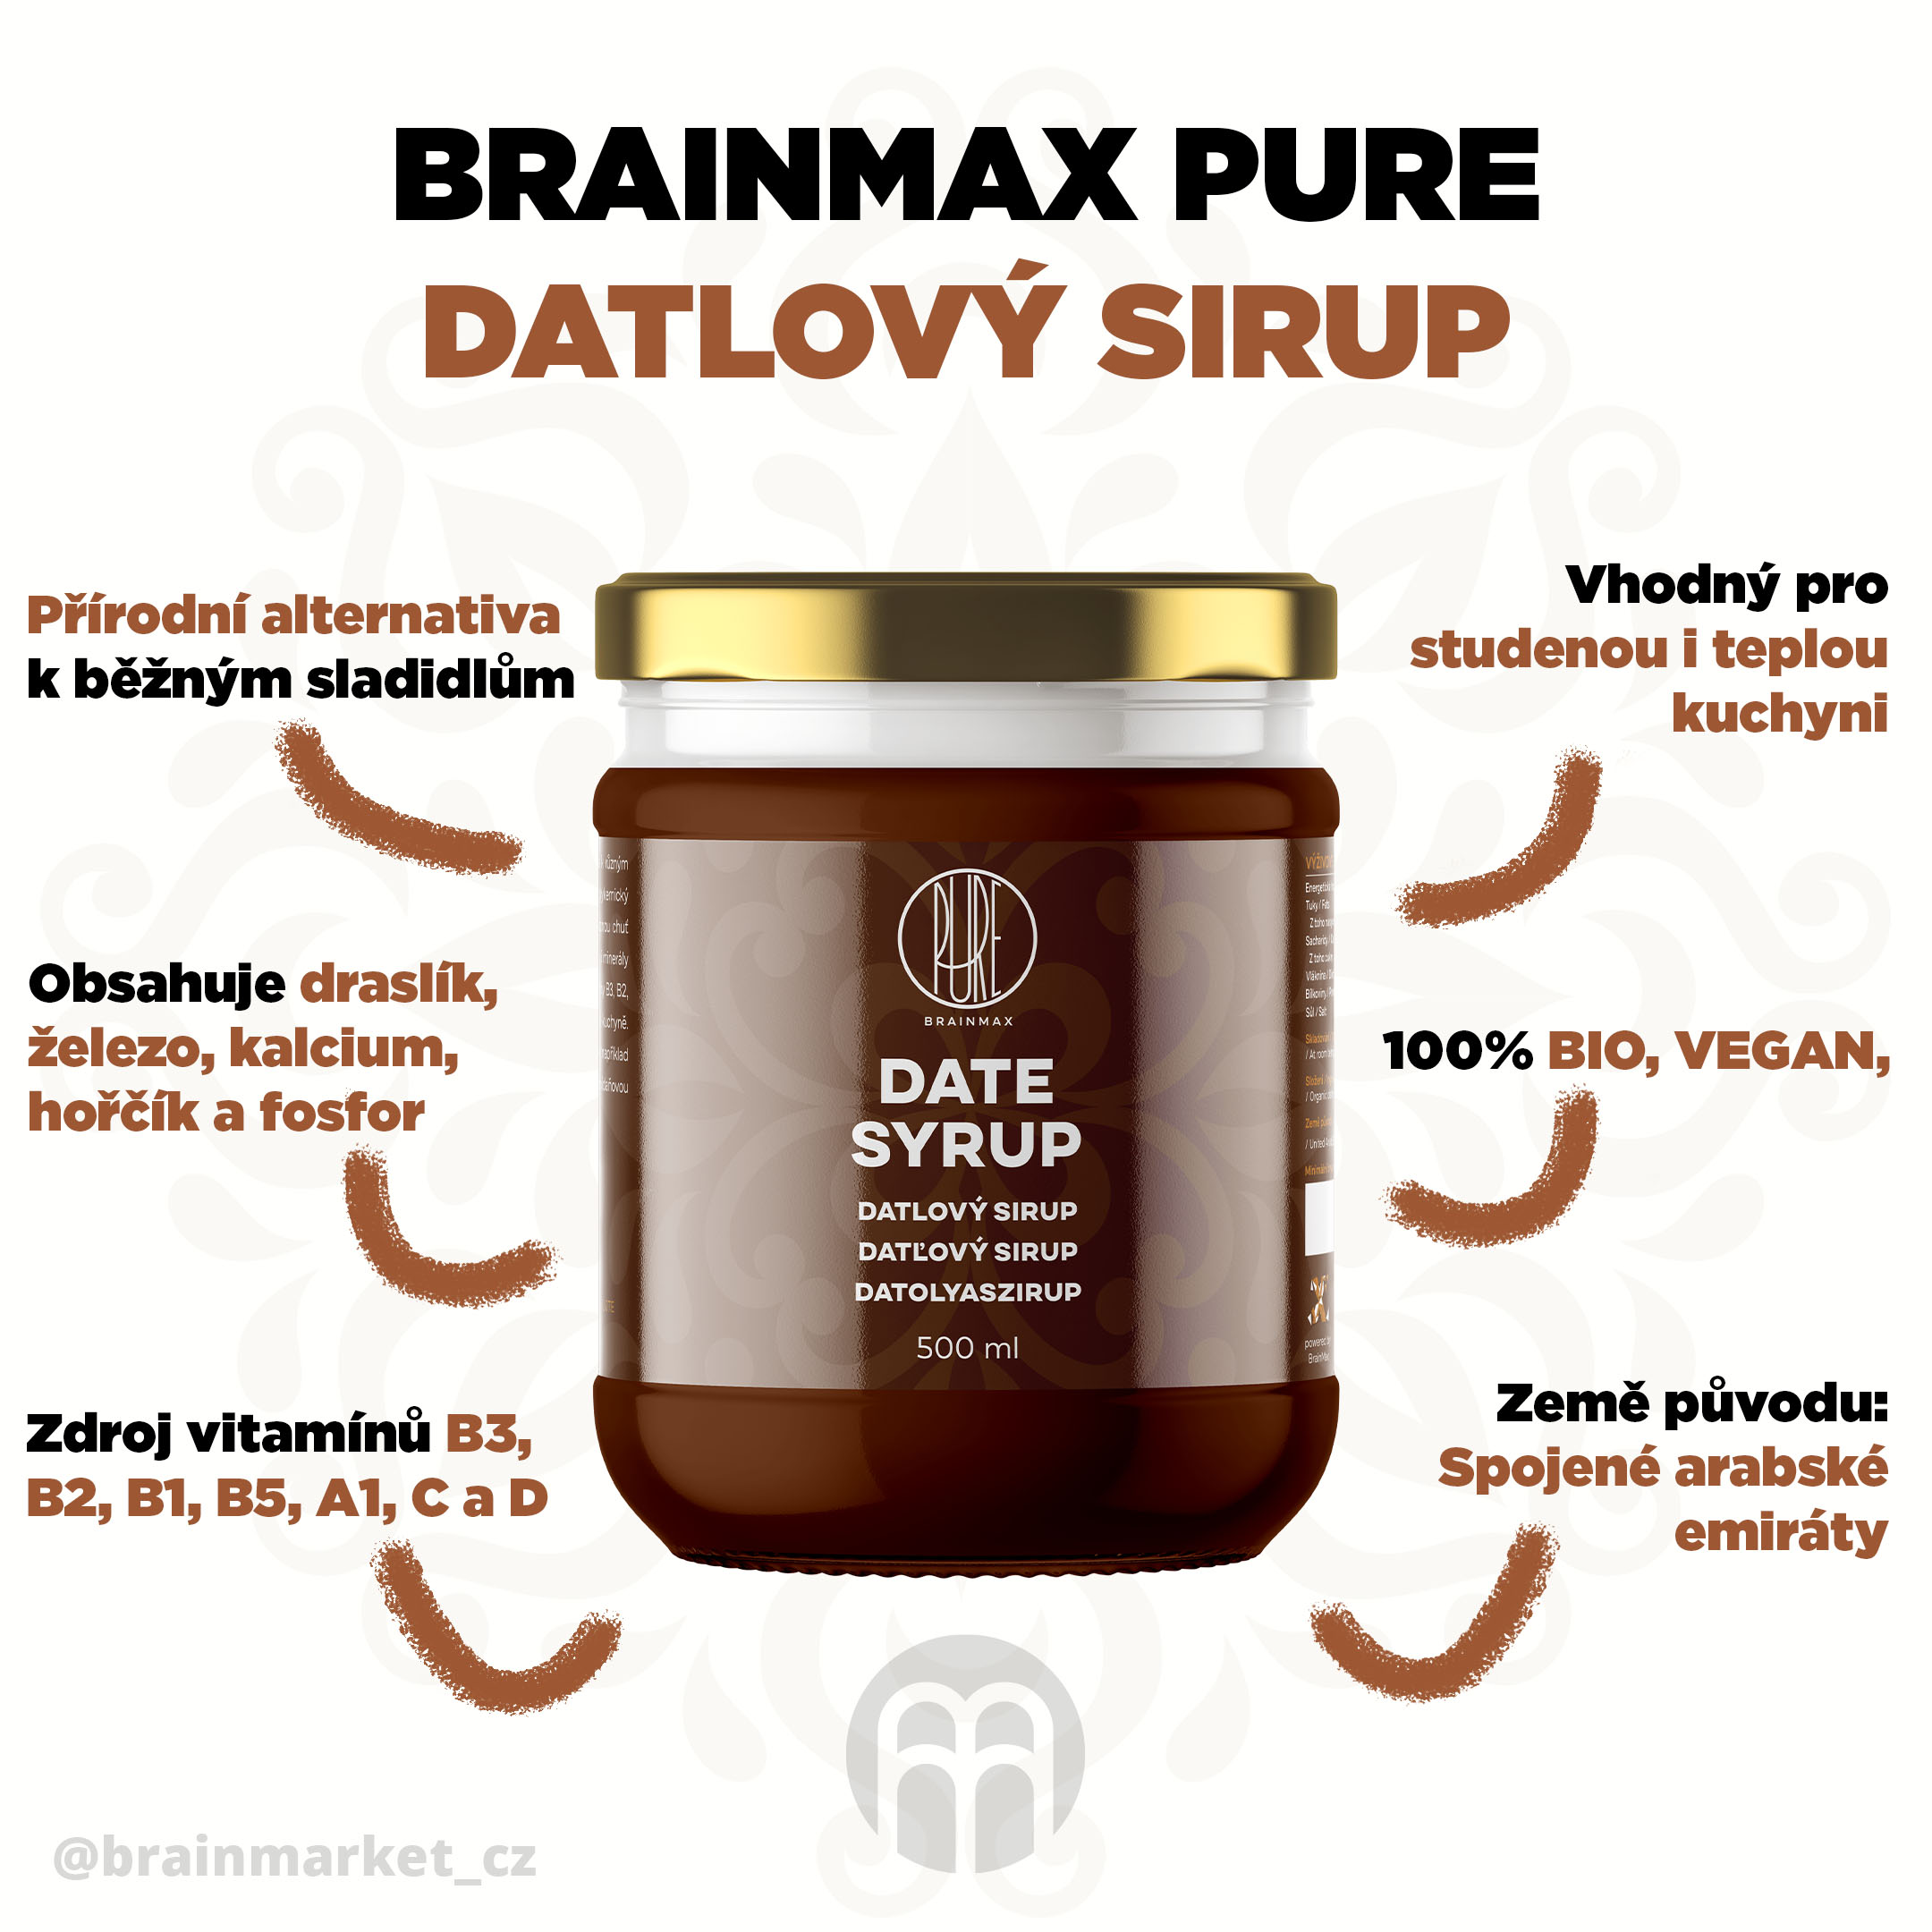 brainmax pure datlovy sirup infografika brainmarket CZ